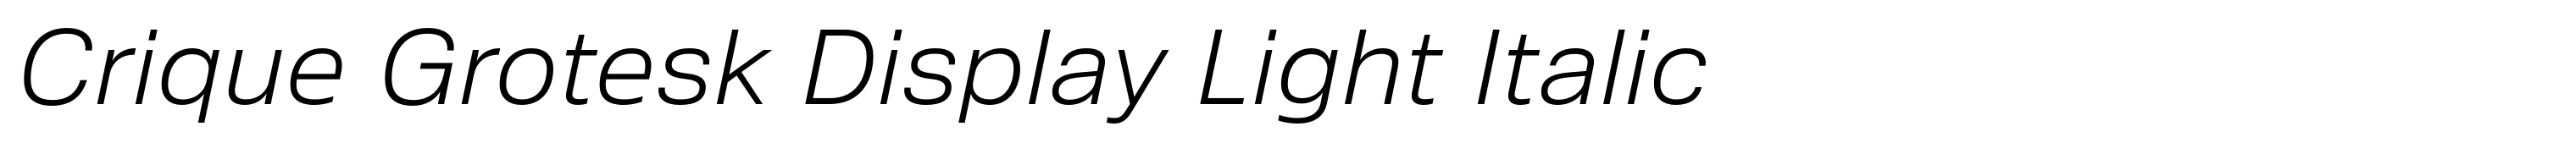 Crique Grotesk Display Light Italic